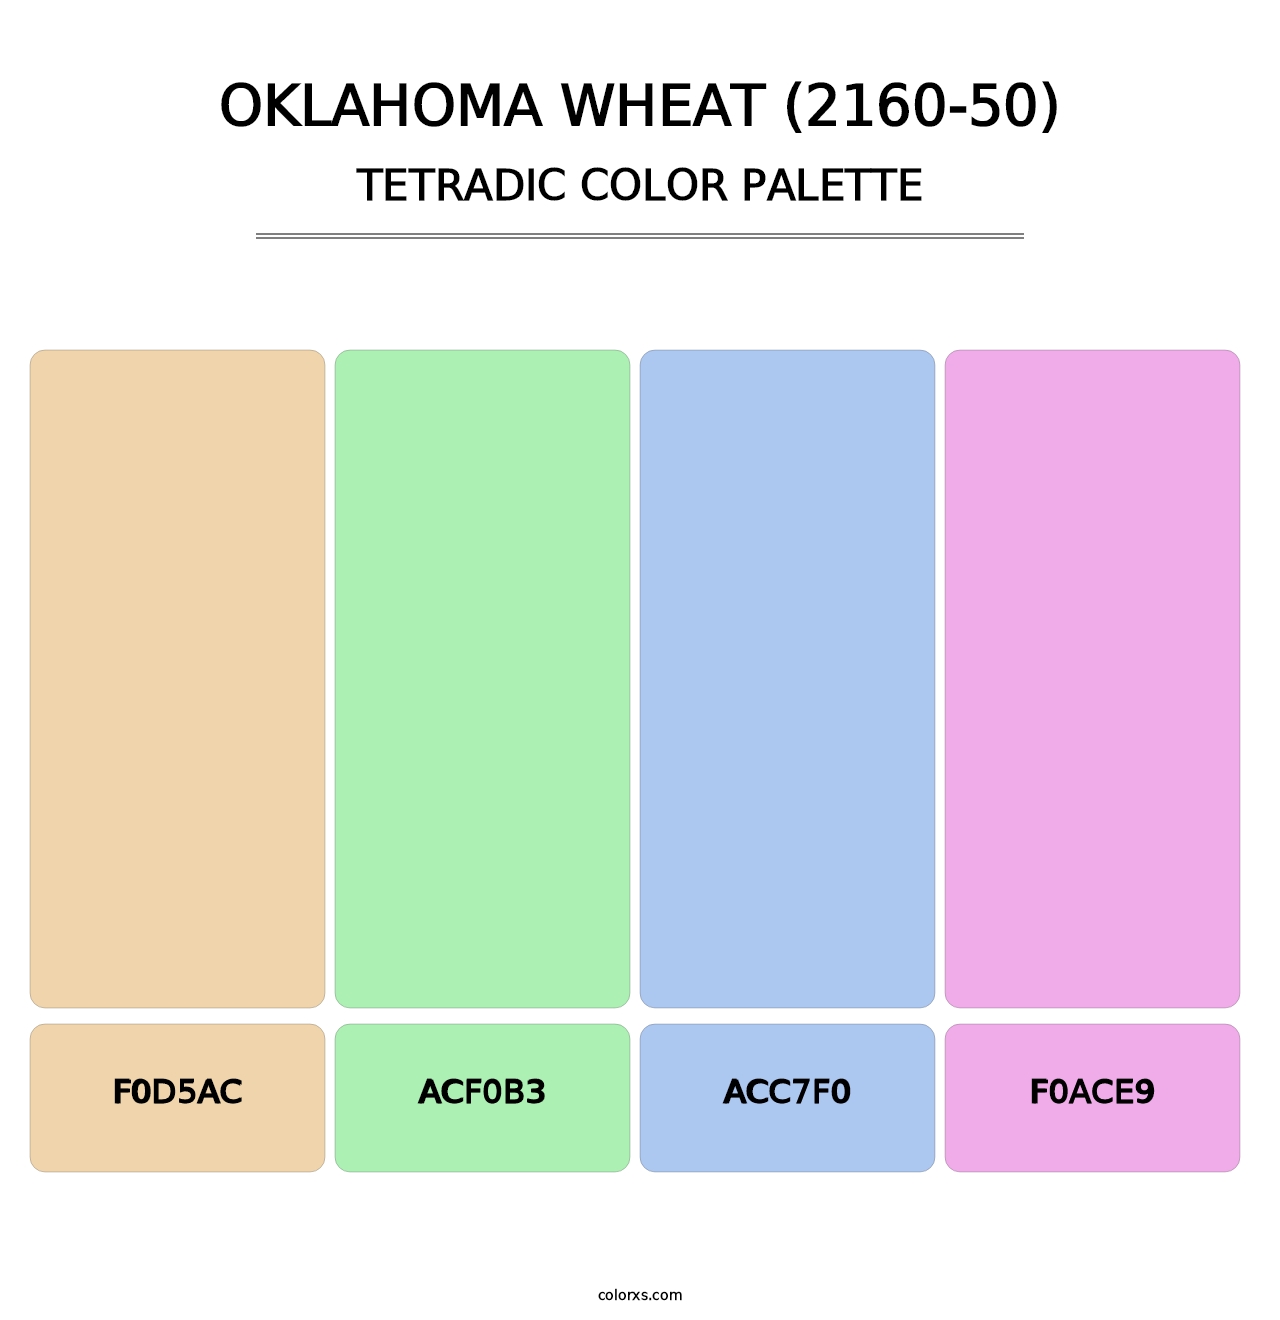 Oklahoma Wheat (2160-50) - Tetradic Color Palette